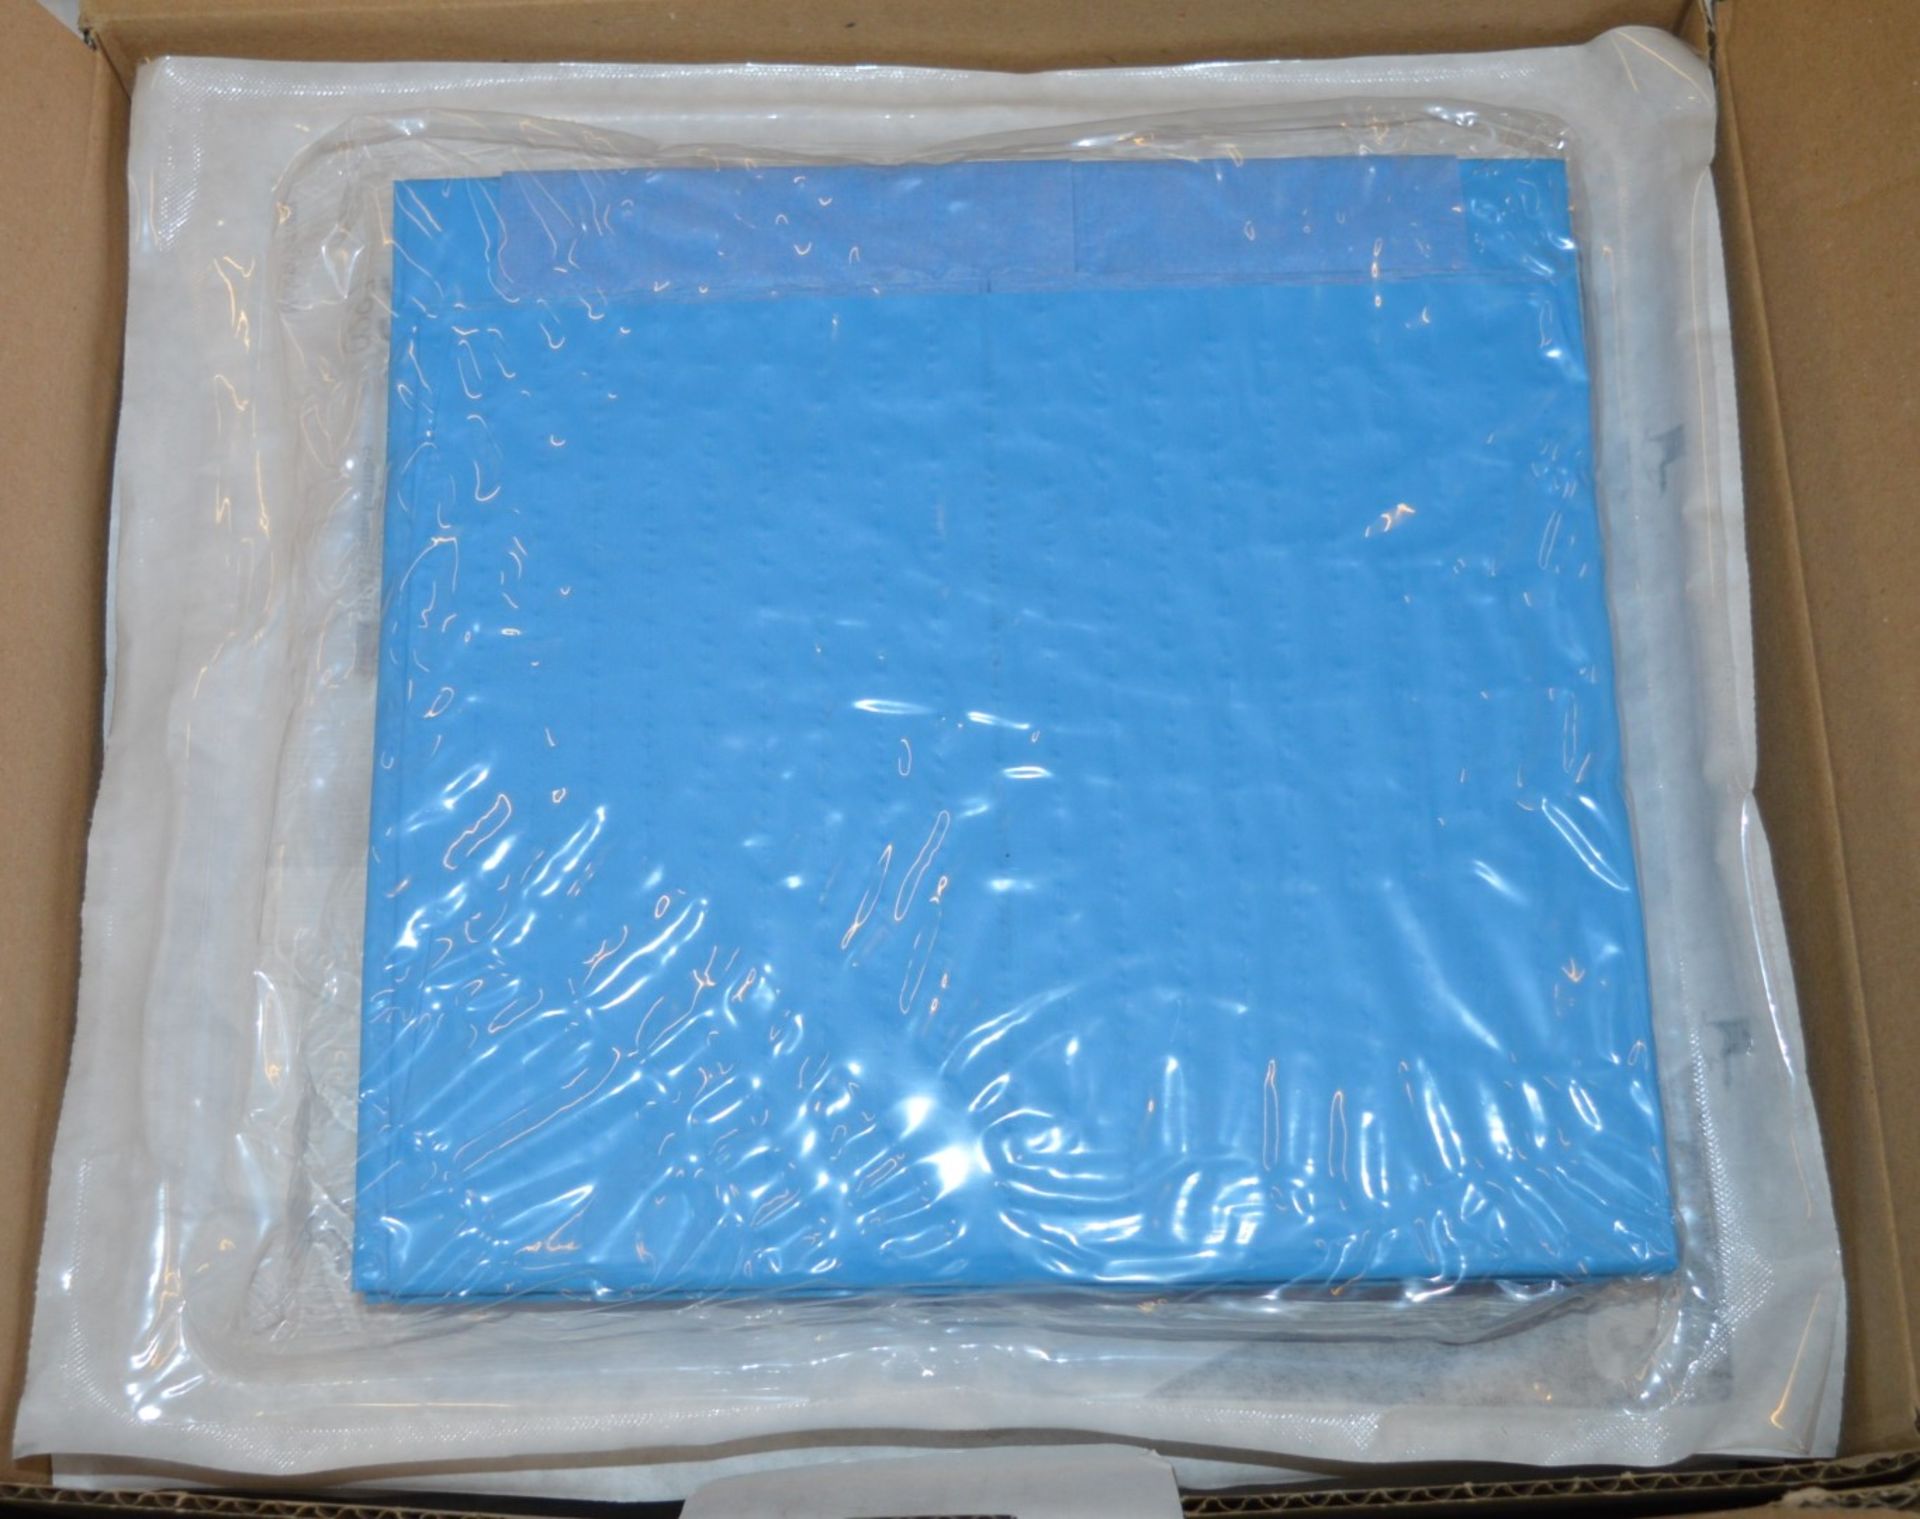 15 x 3M Steri-Drape Sheet Instrumental Table Covers - Product Code 9077E - Size 200x150cm - Brand - Image 4 of 5